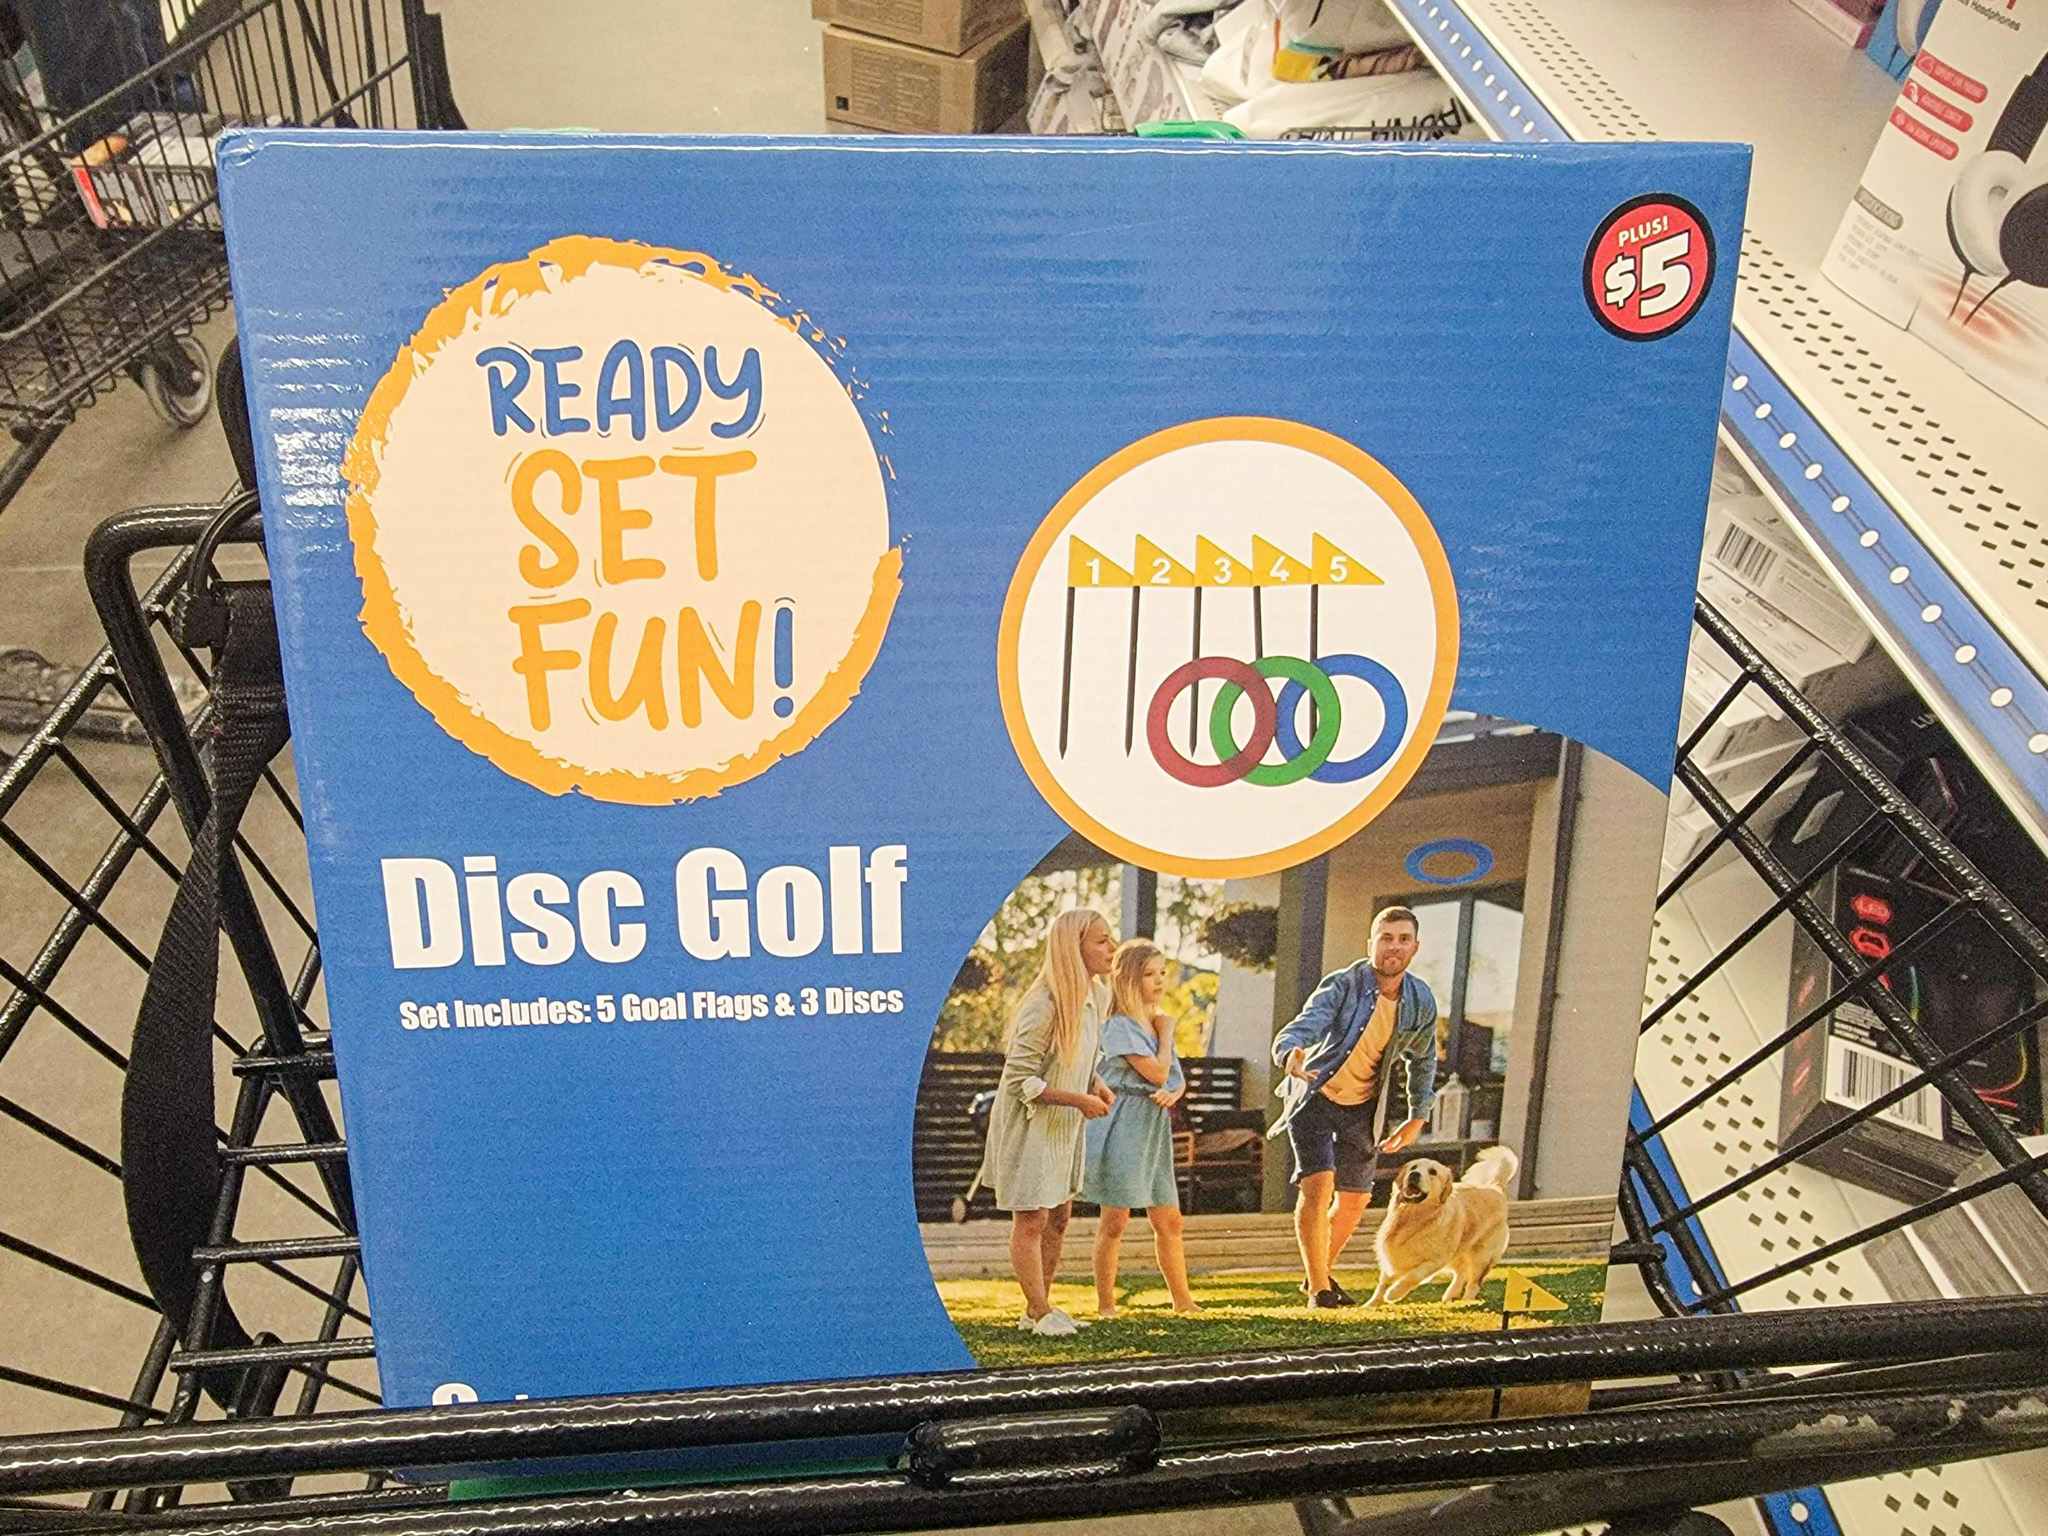 disc golf game